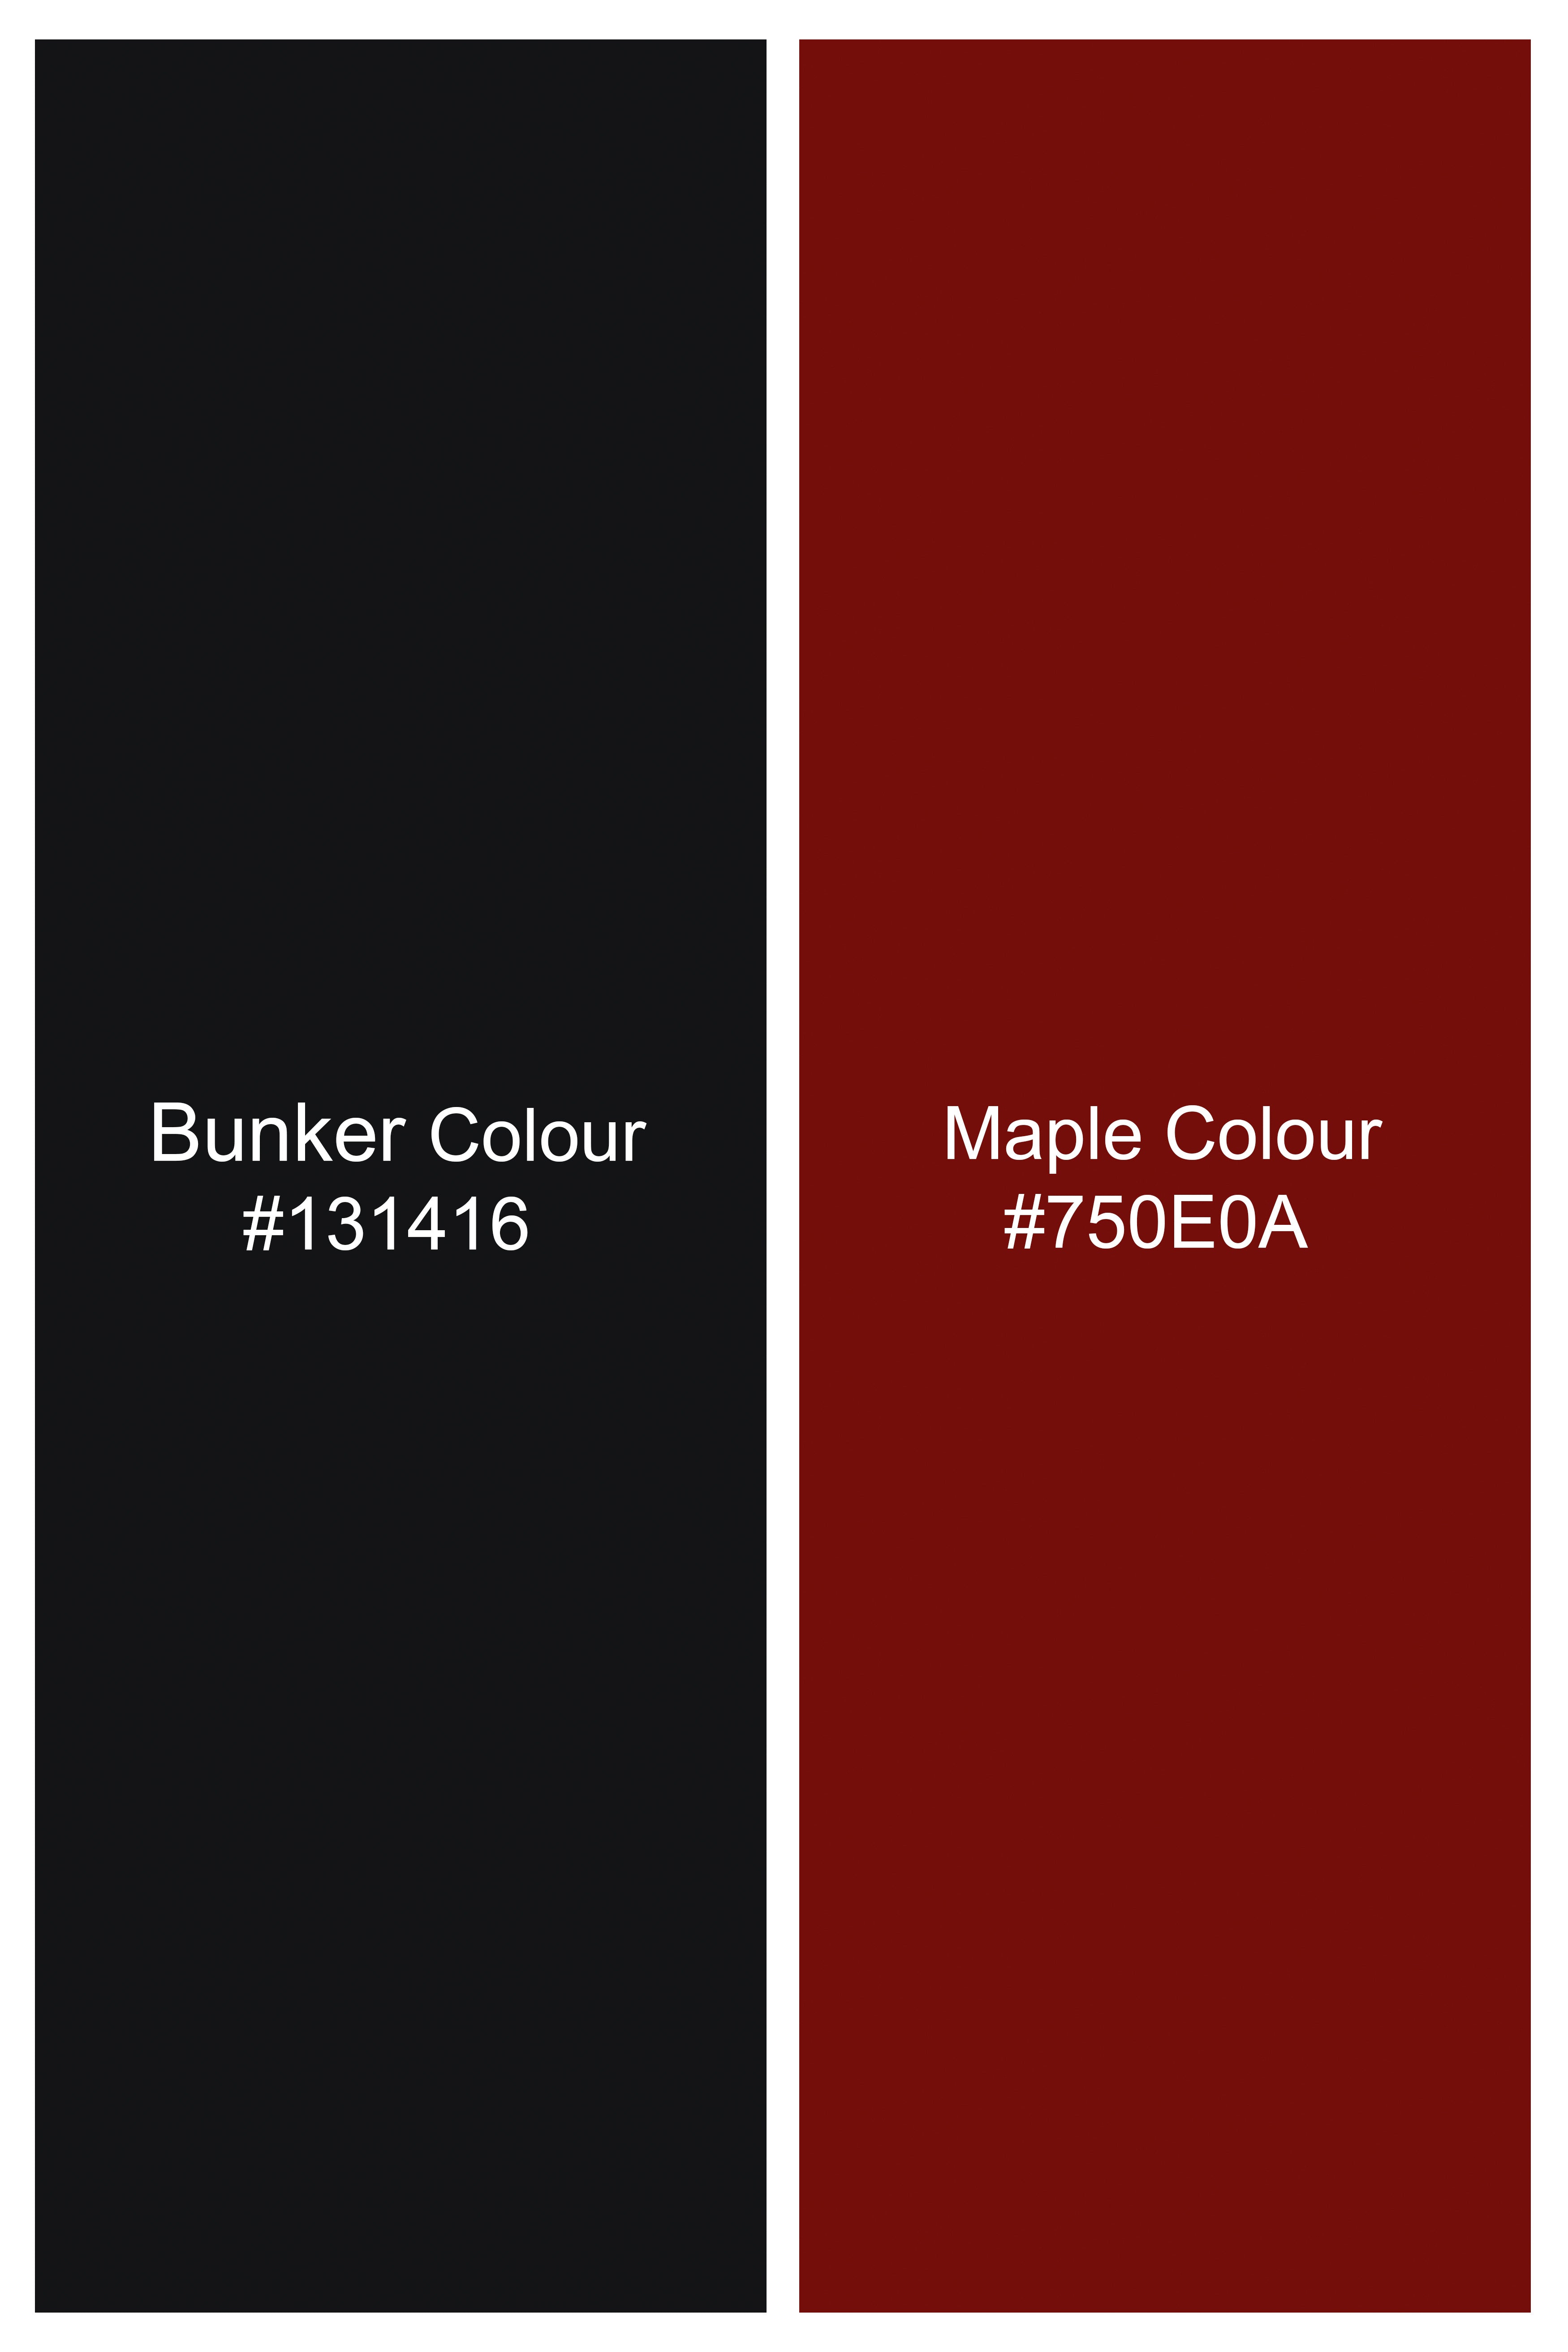 Bunker Black and Maple Red Windowpane Tweed Blazer BL3124-SB-36, BL3124-SB-38, BL3124-SB-40, BL3124-SB-42, BL3124-SB-44, BL3124-SB-46, BL3124-SB-48, BL3124-SB-50, BL3124-SB-52, BL3124-SB-54, BL3124-SB-56, BL3124-SB-58, BL3124-SB-60